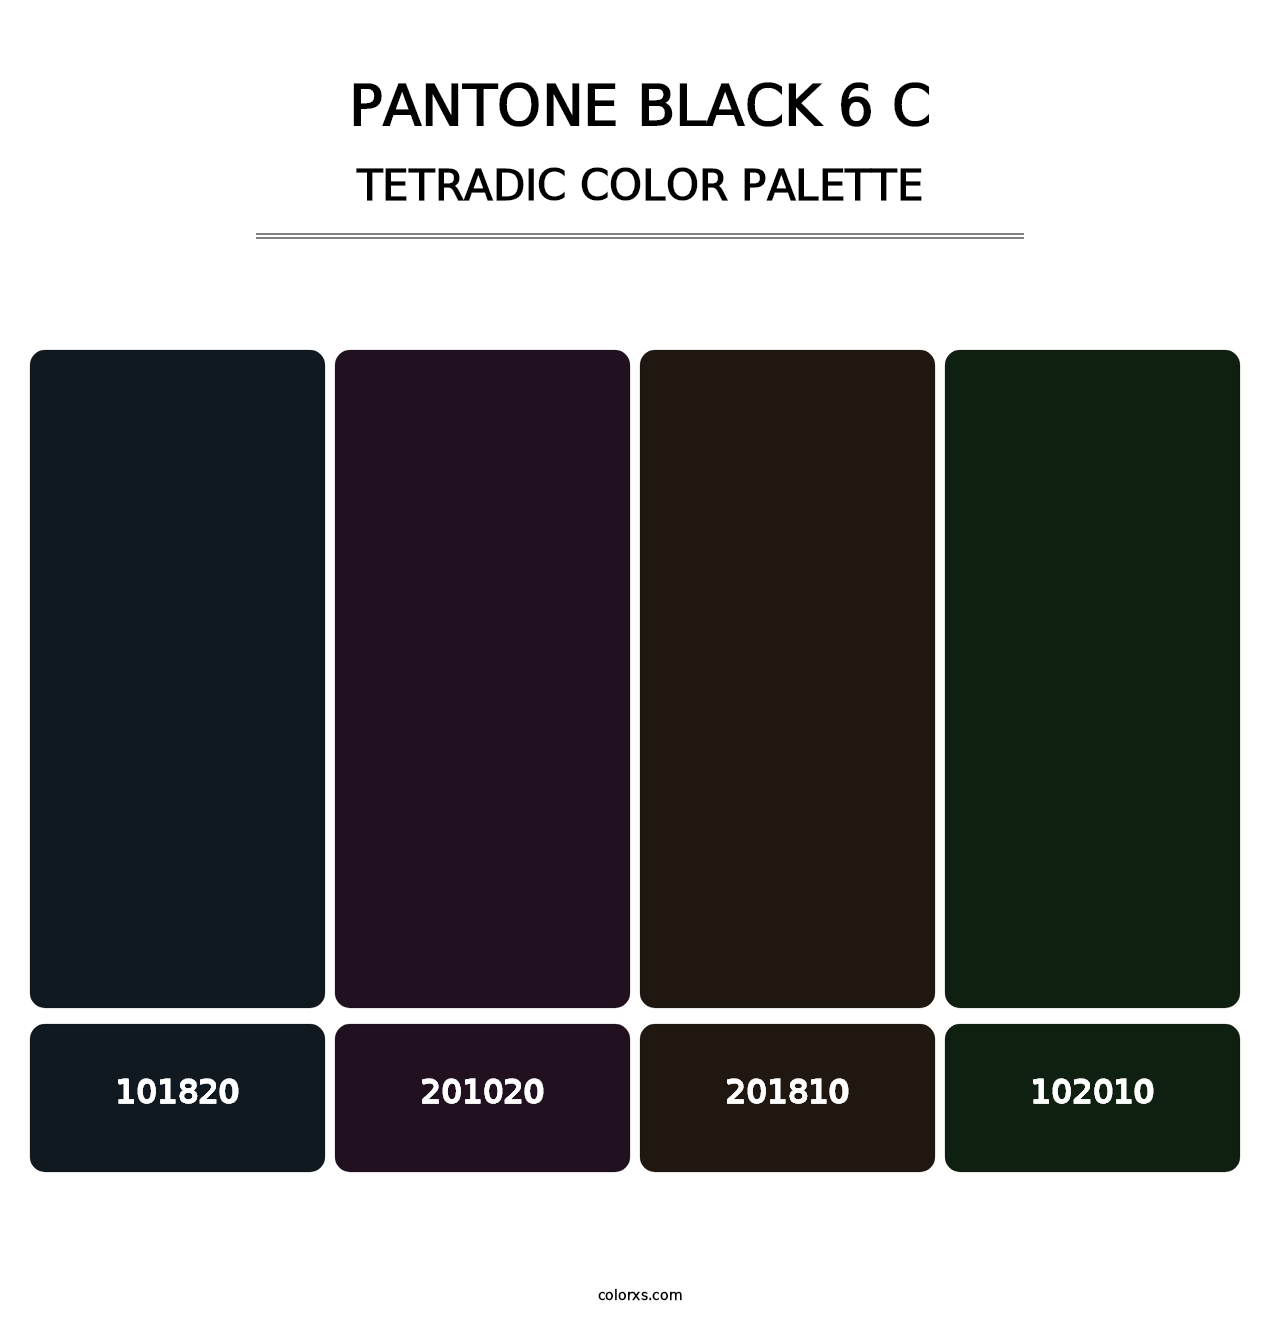 PANTONE Black 6 C - Tetradic Color Palette